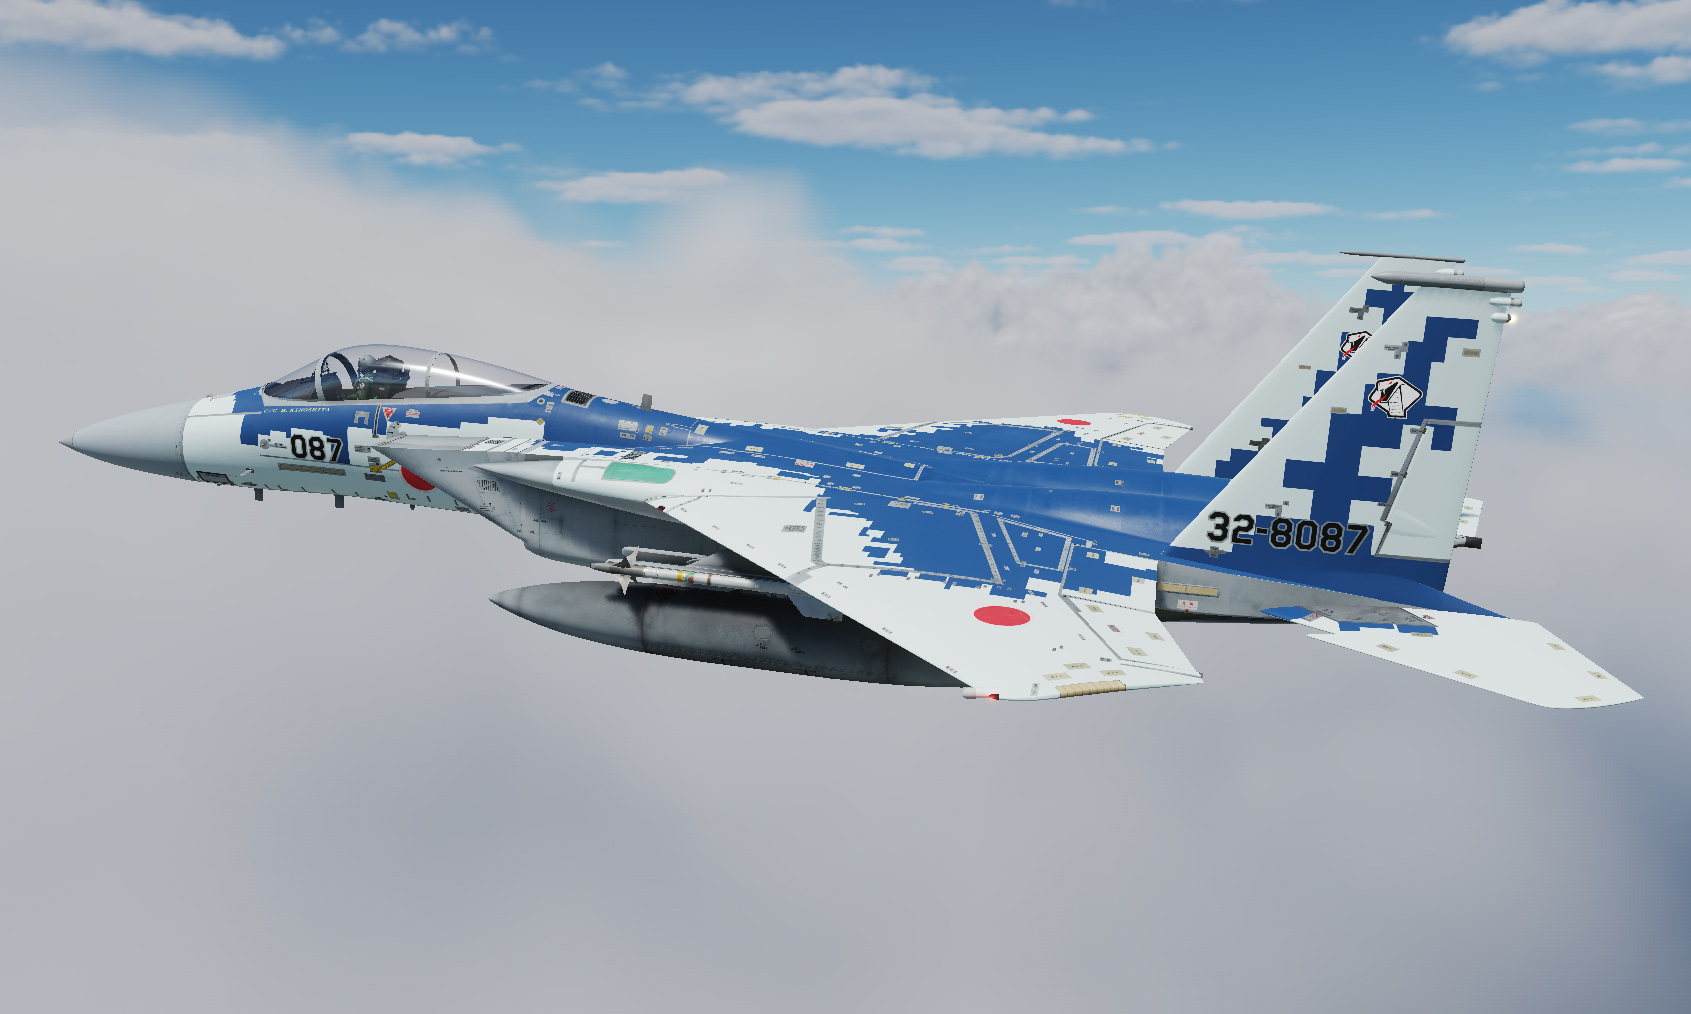 JASDF F-15DJ AGGRESSOR 32-8087 Skin {Fictional}